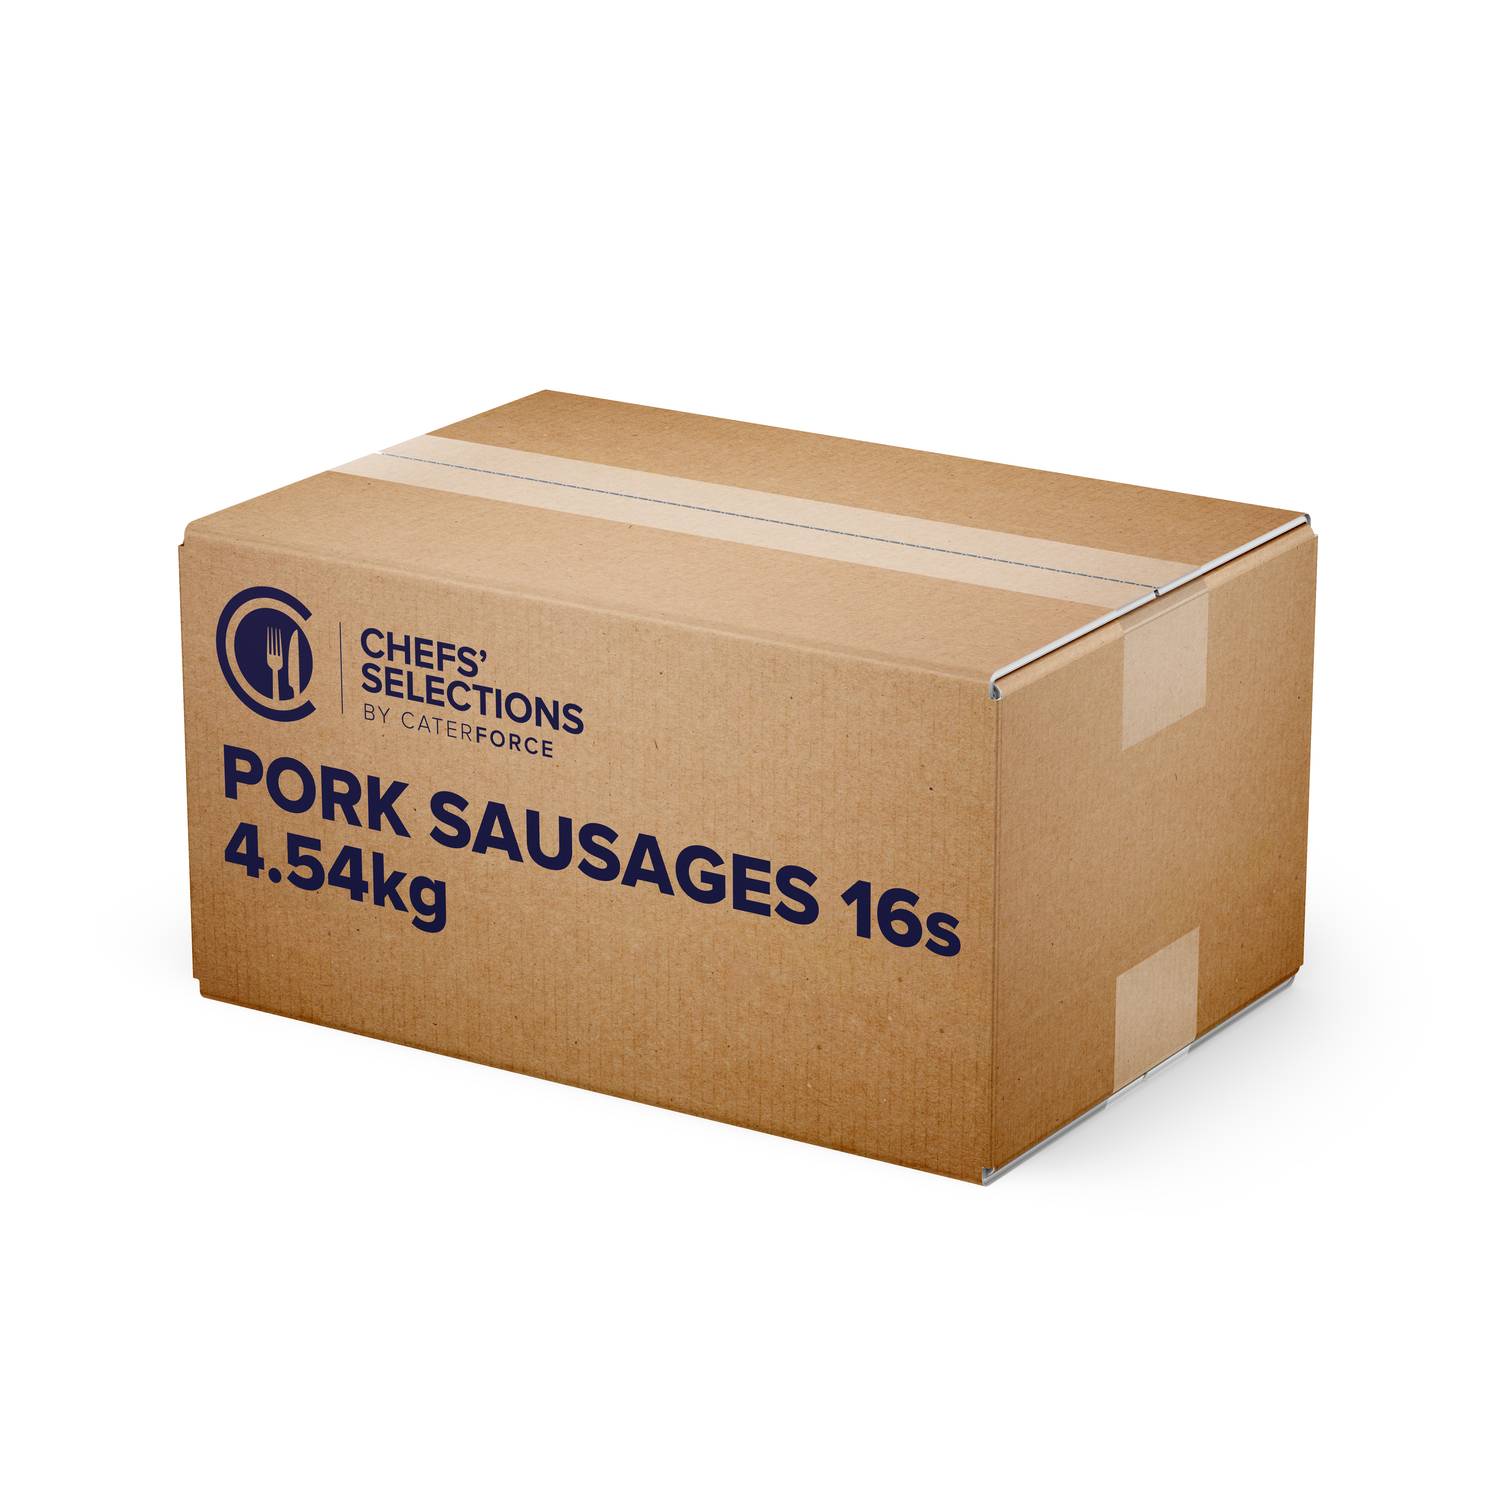 Chefs’ Selections Pork Sausages 16’s (1 x 4.54kg)